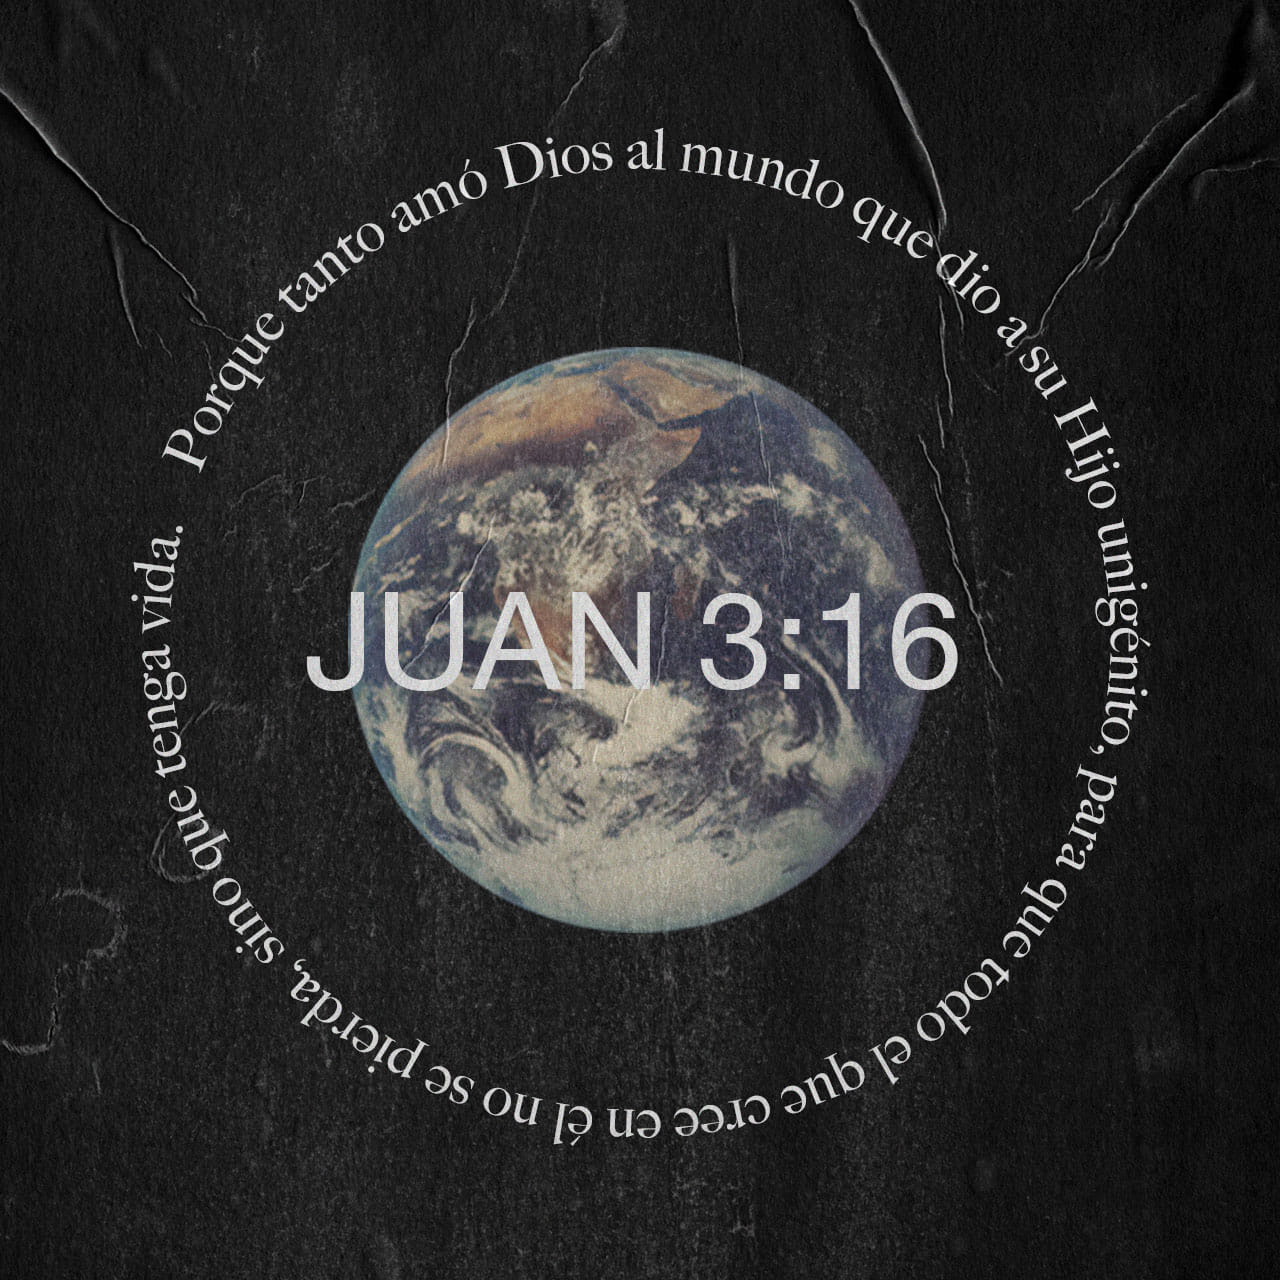 Juan 3:16